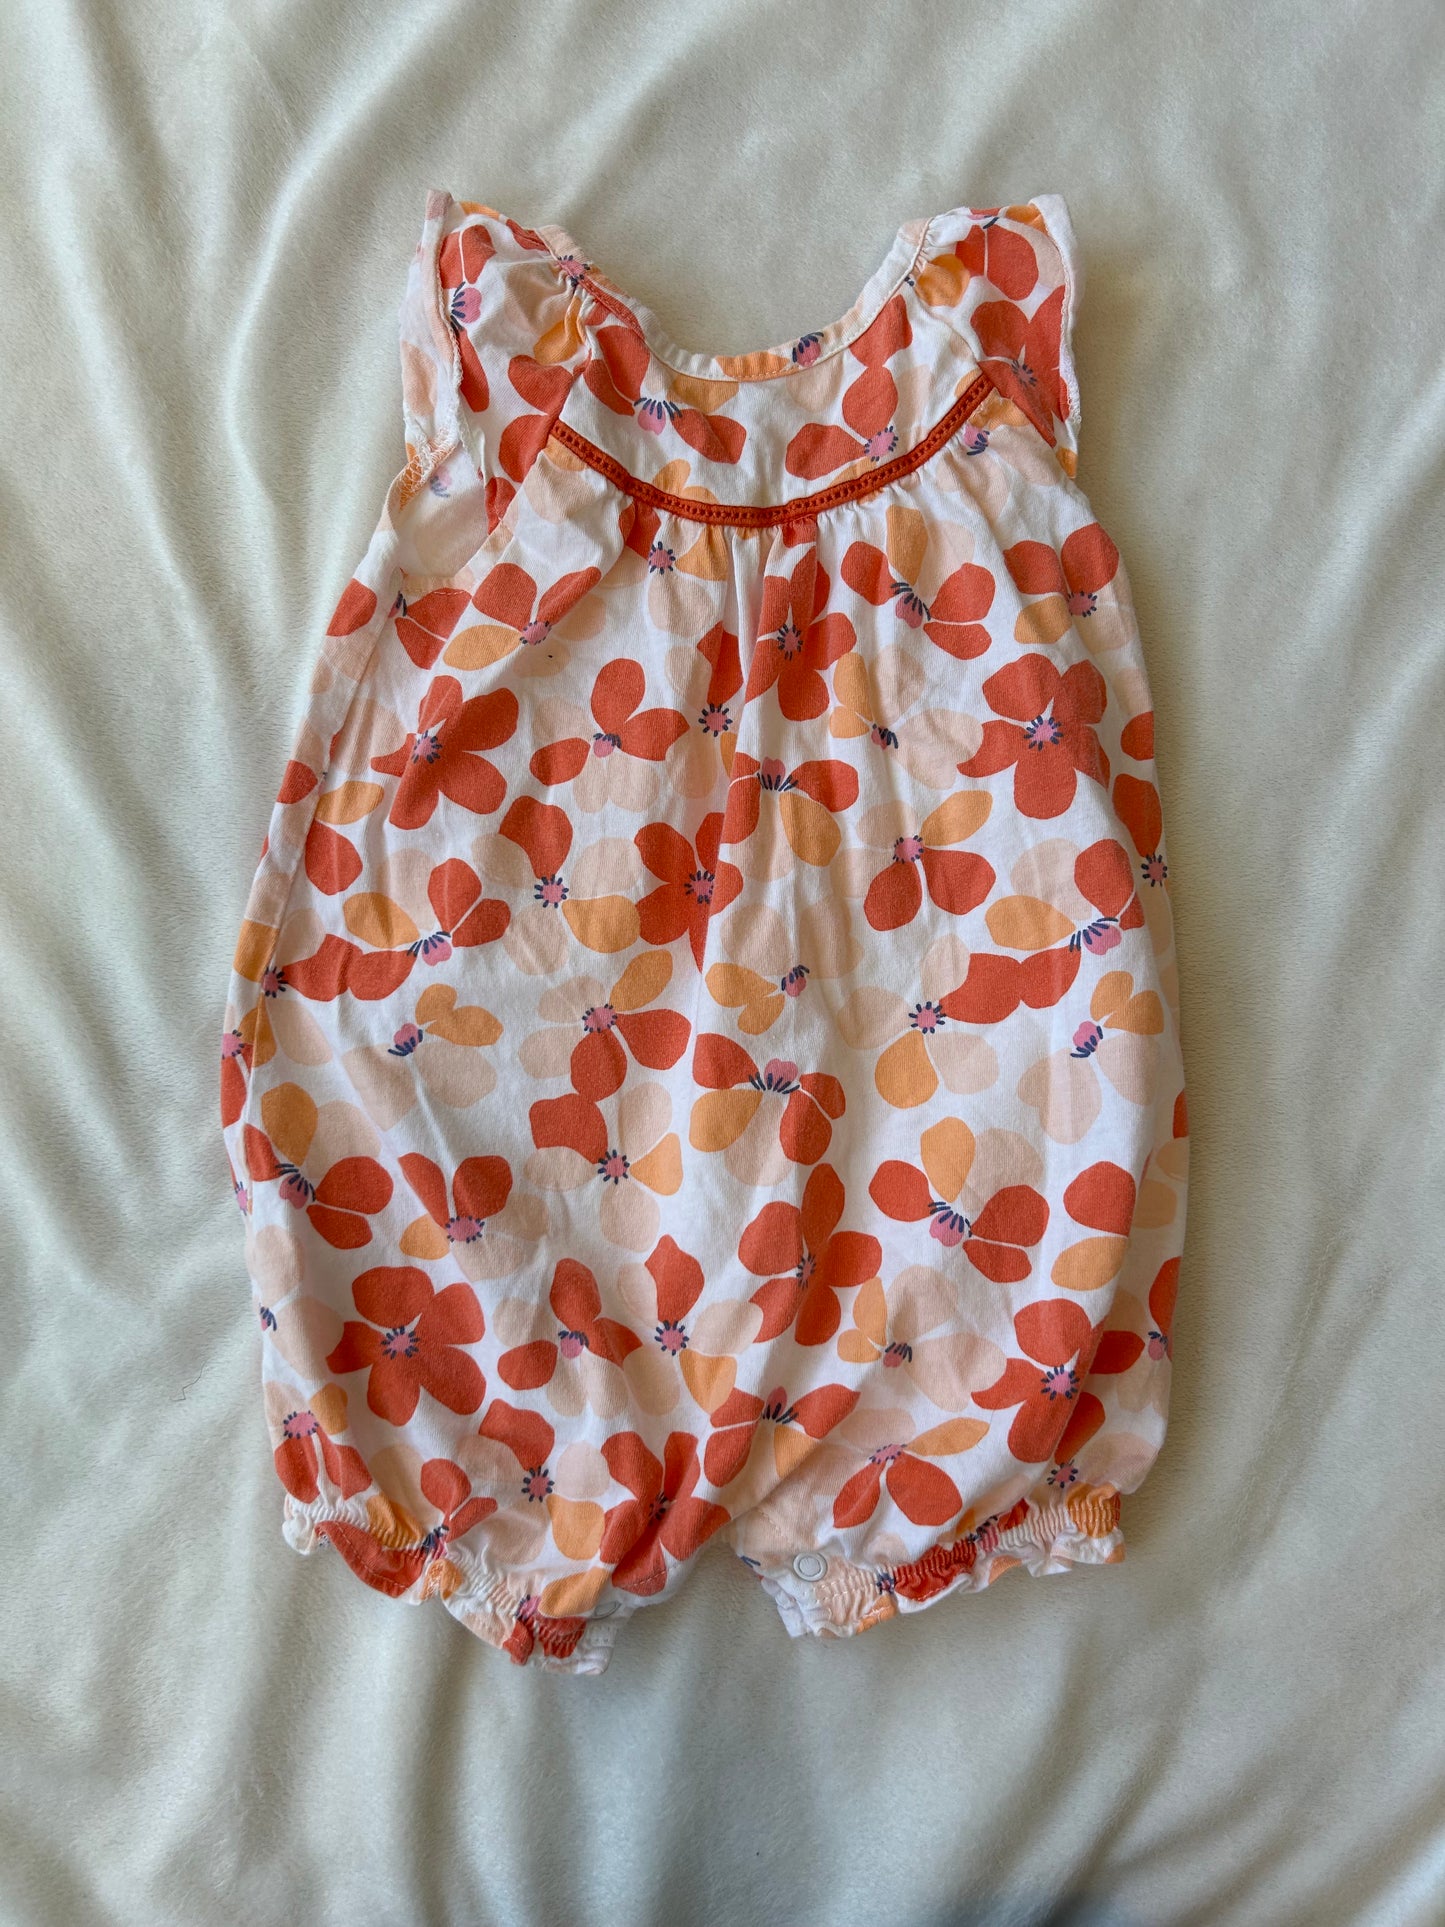 Carter's 18 month Girl Orange/Peach Floral Romper EUC